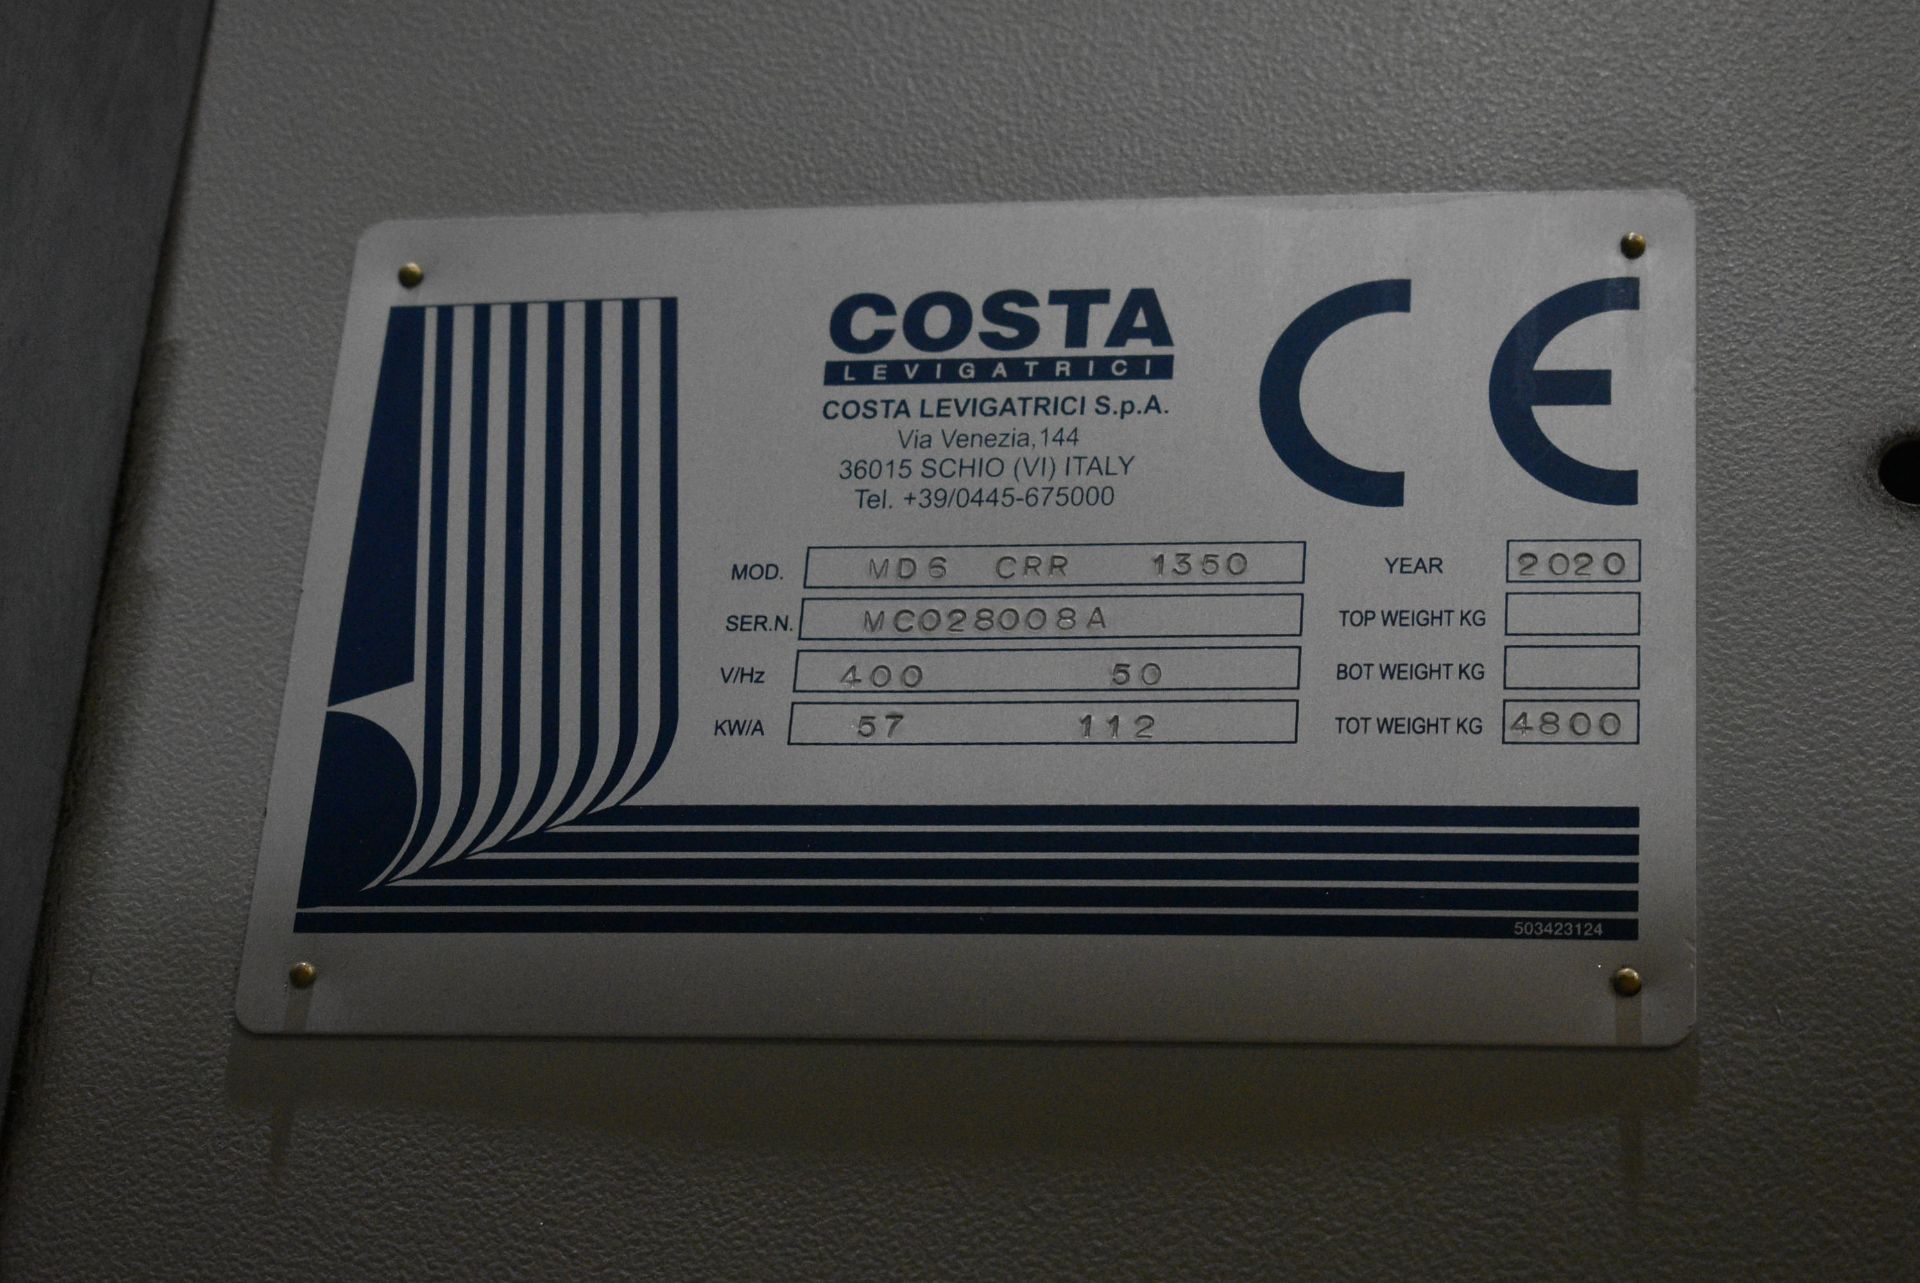 Costa MD6 CRR 1350 DEBURRER, serial no. MC028008A, - Image 16 of 17